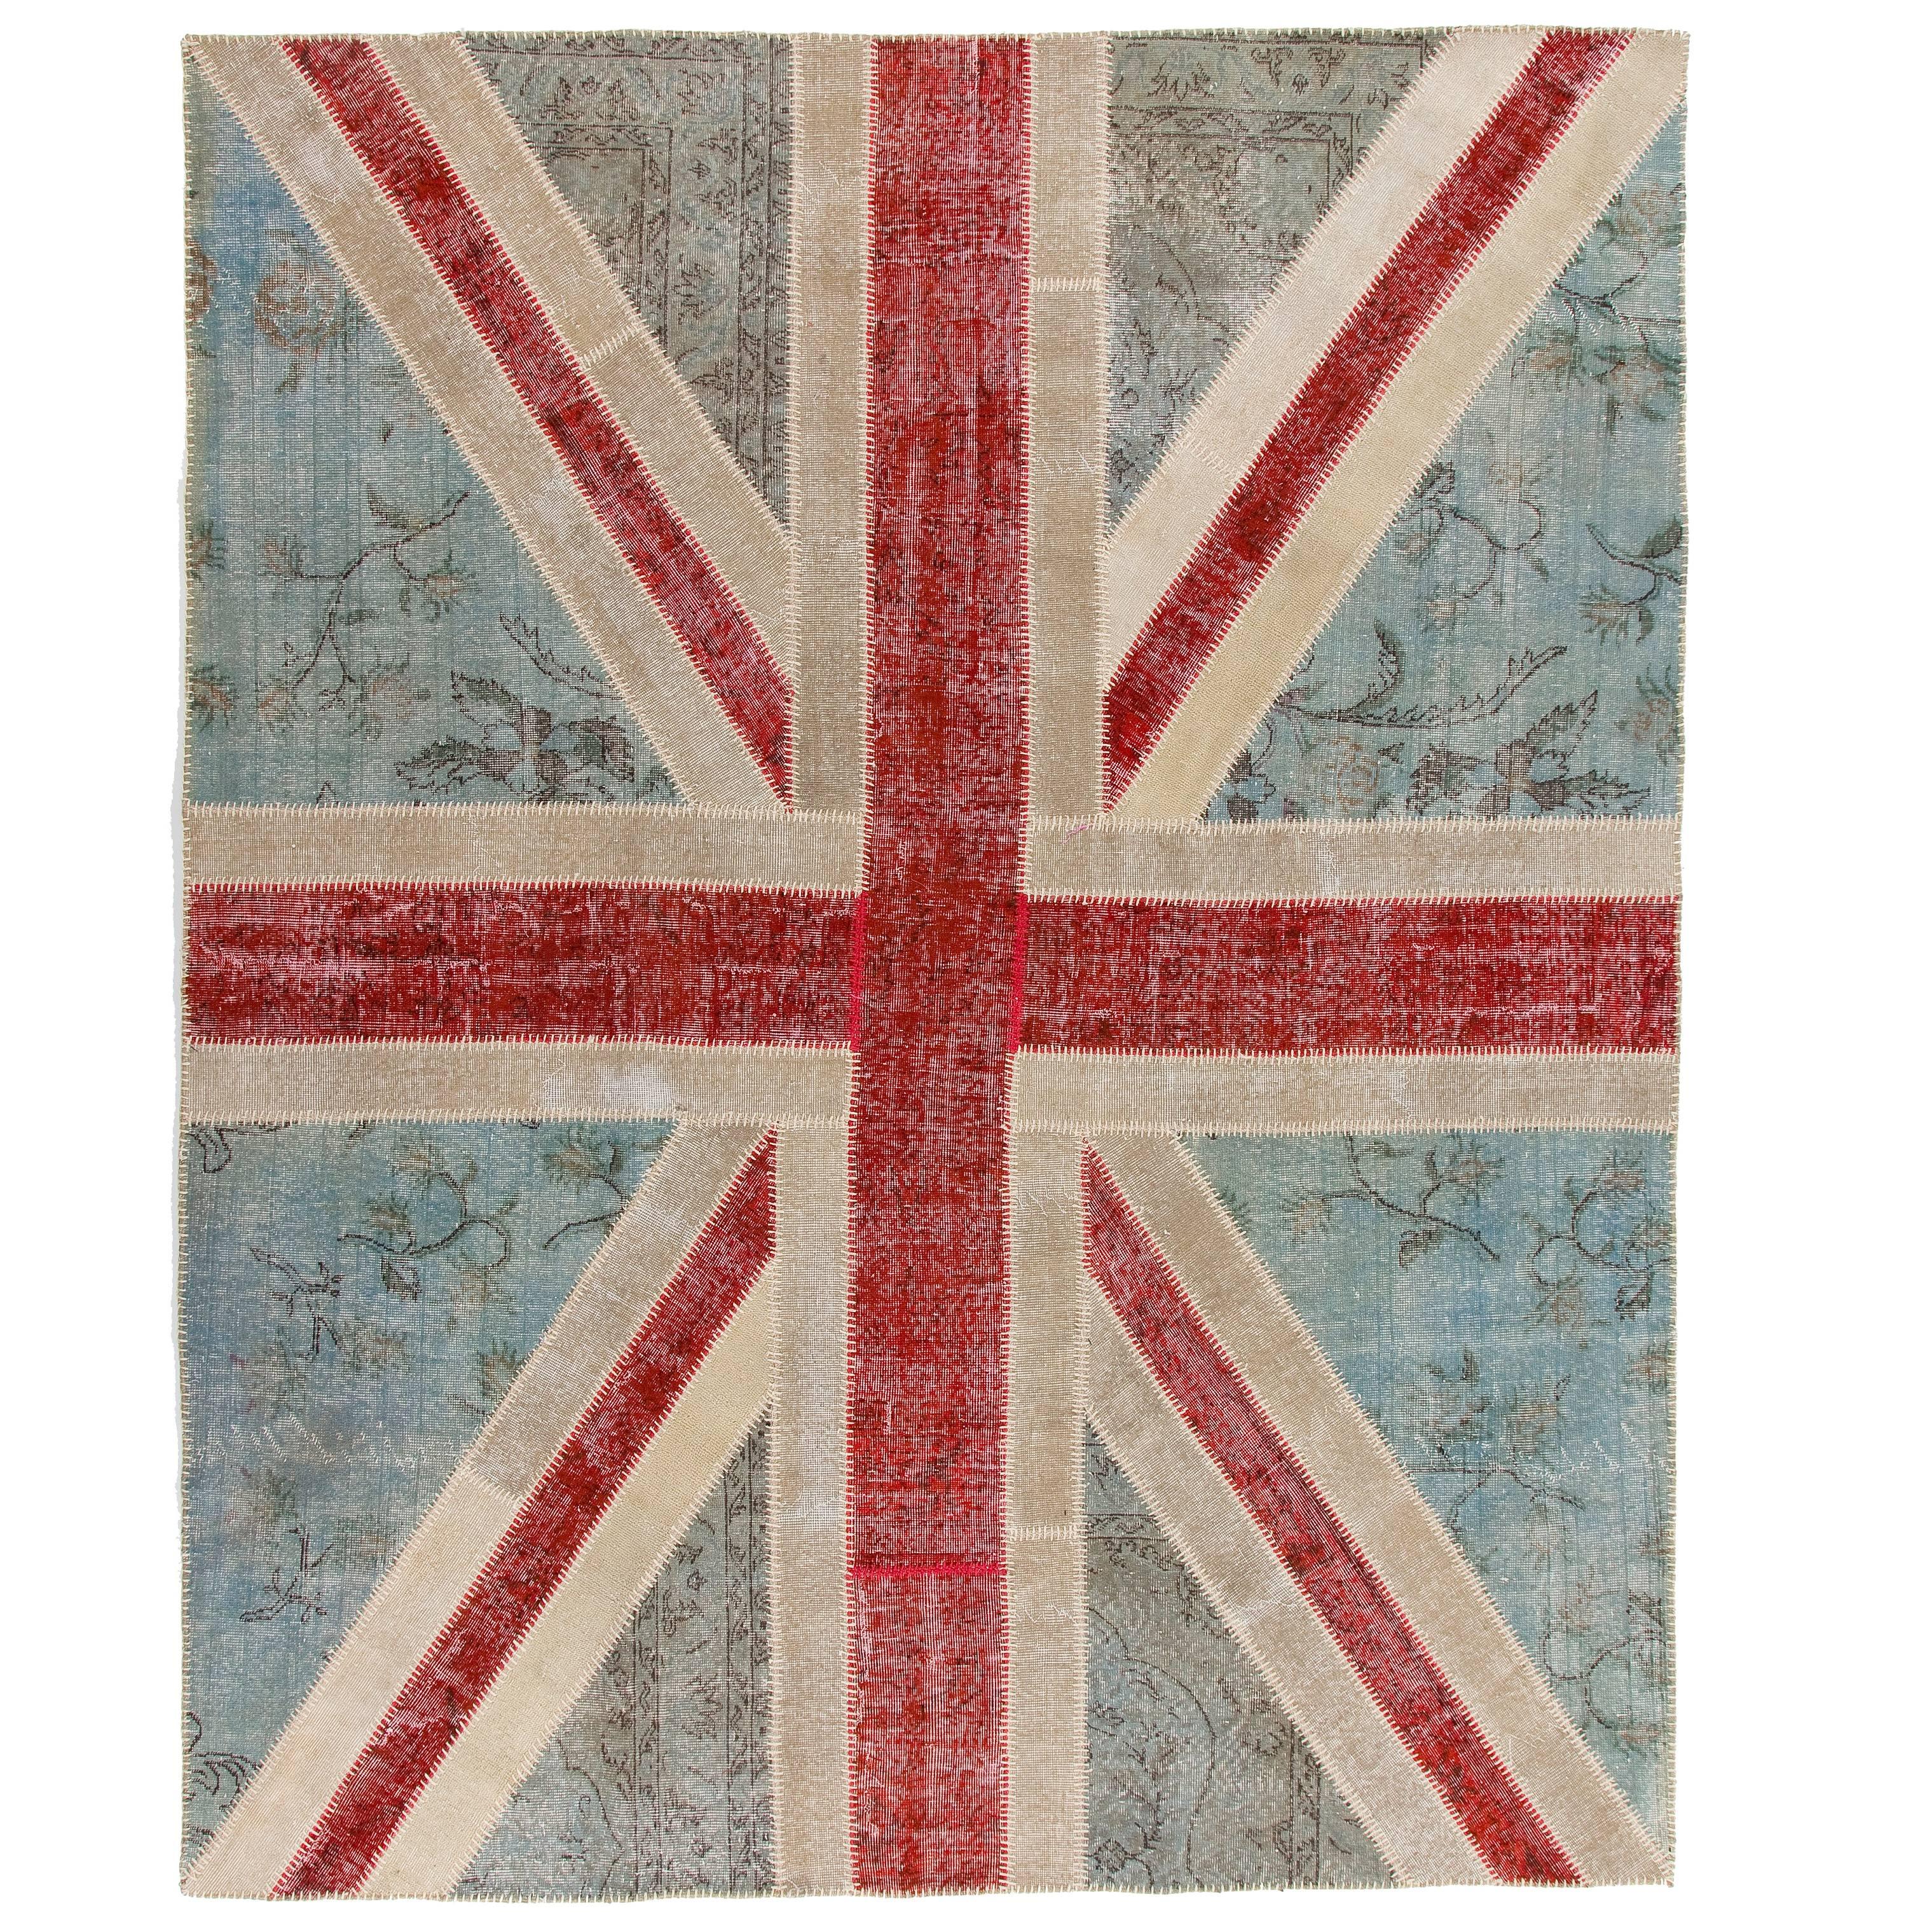 Union Jack British Flag Design Handmade Patchwork Rug. Custom Options Available For Sale